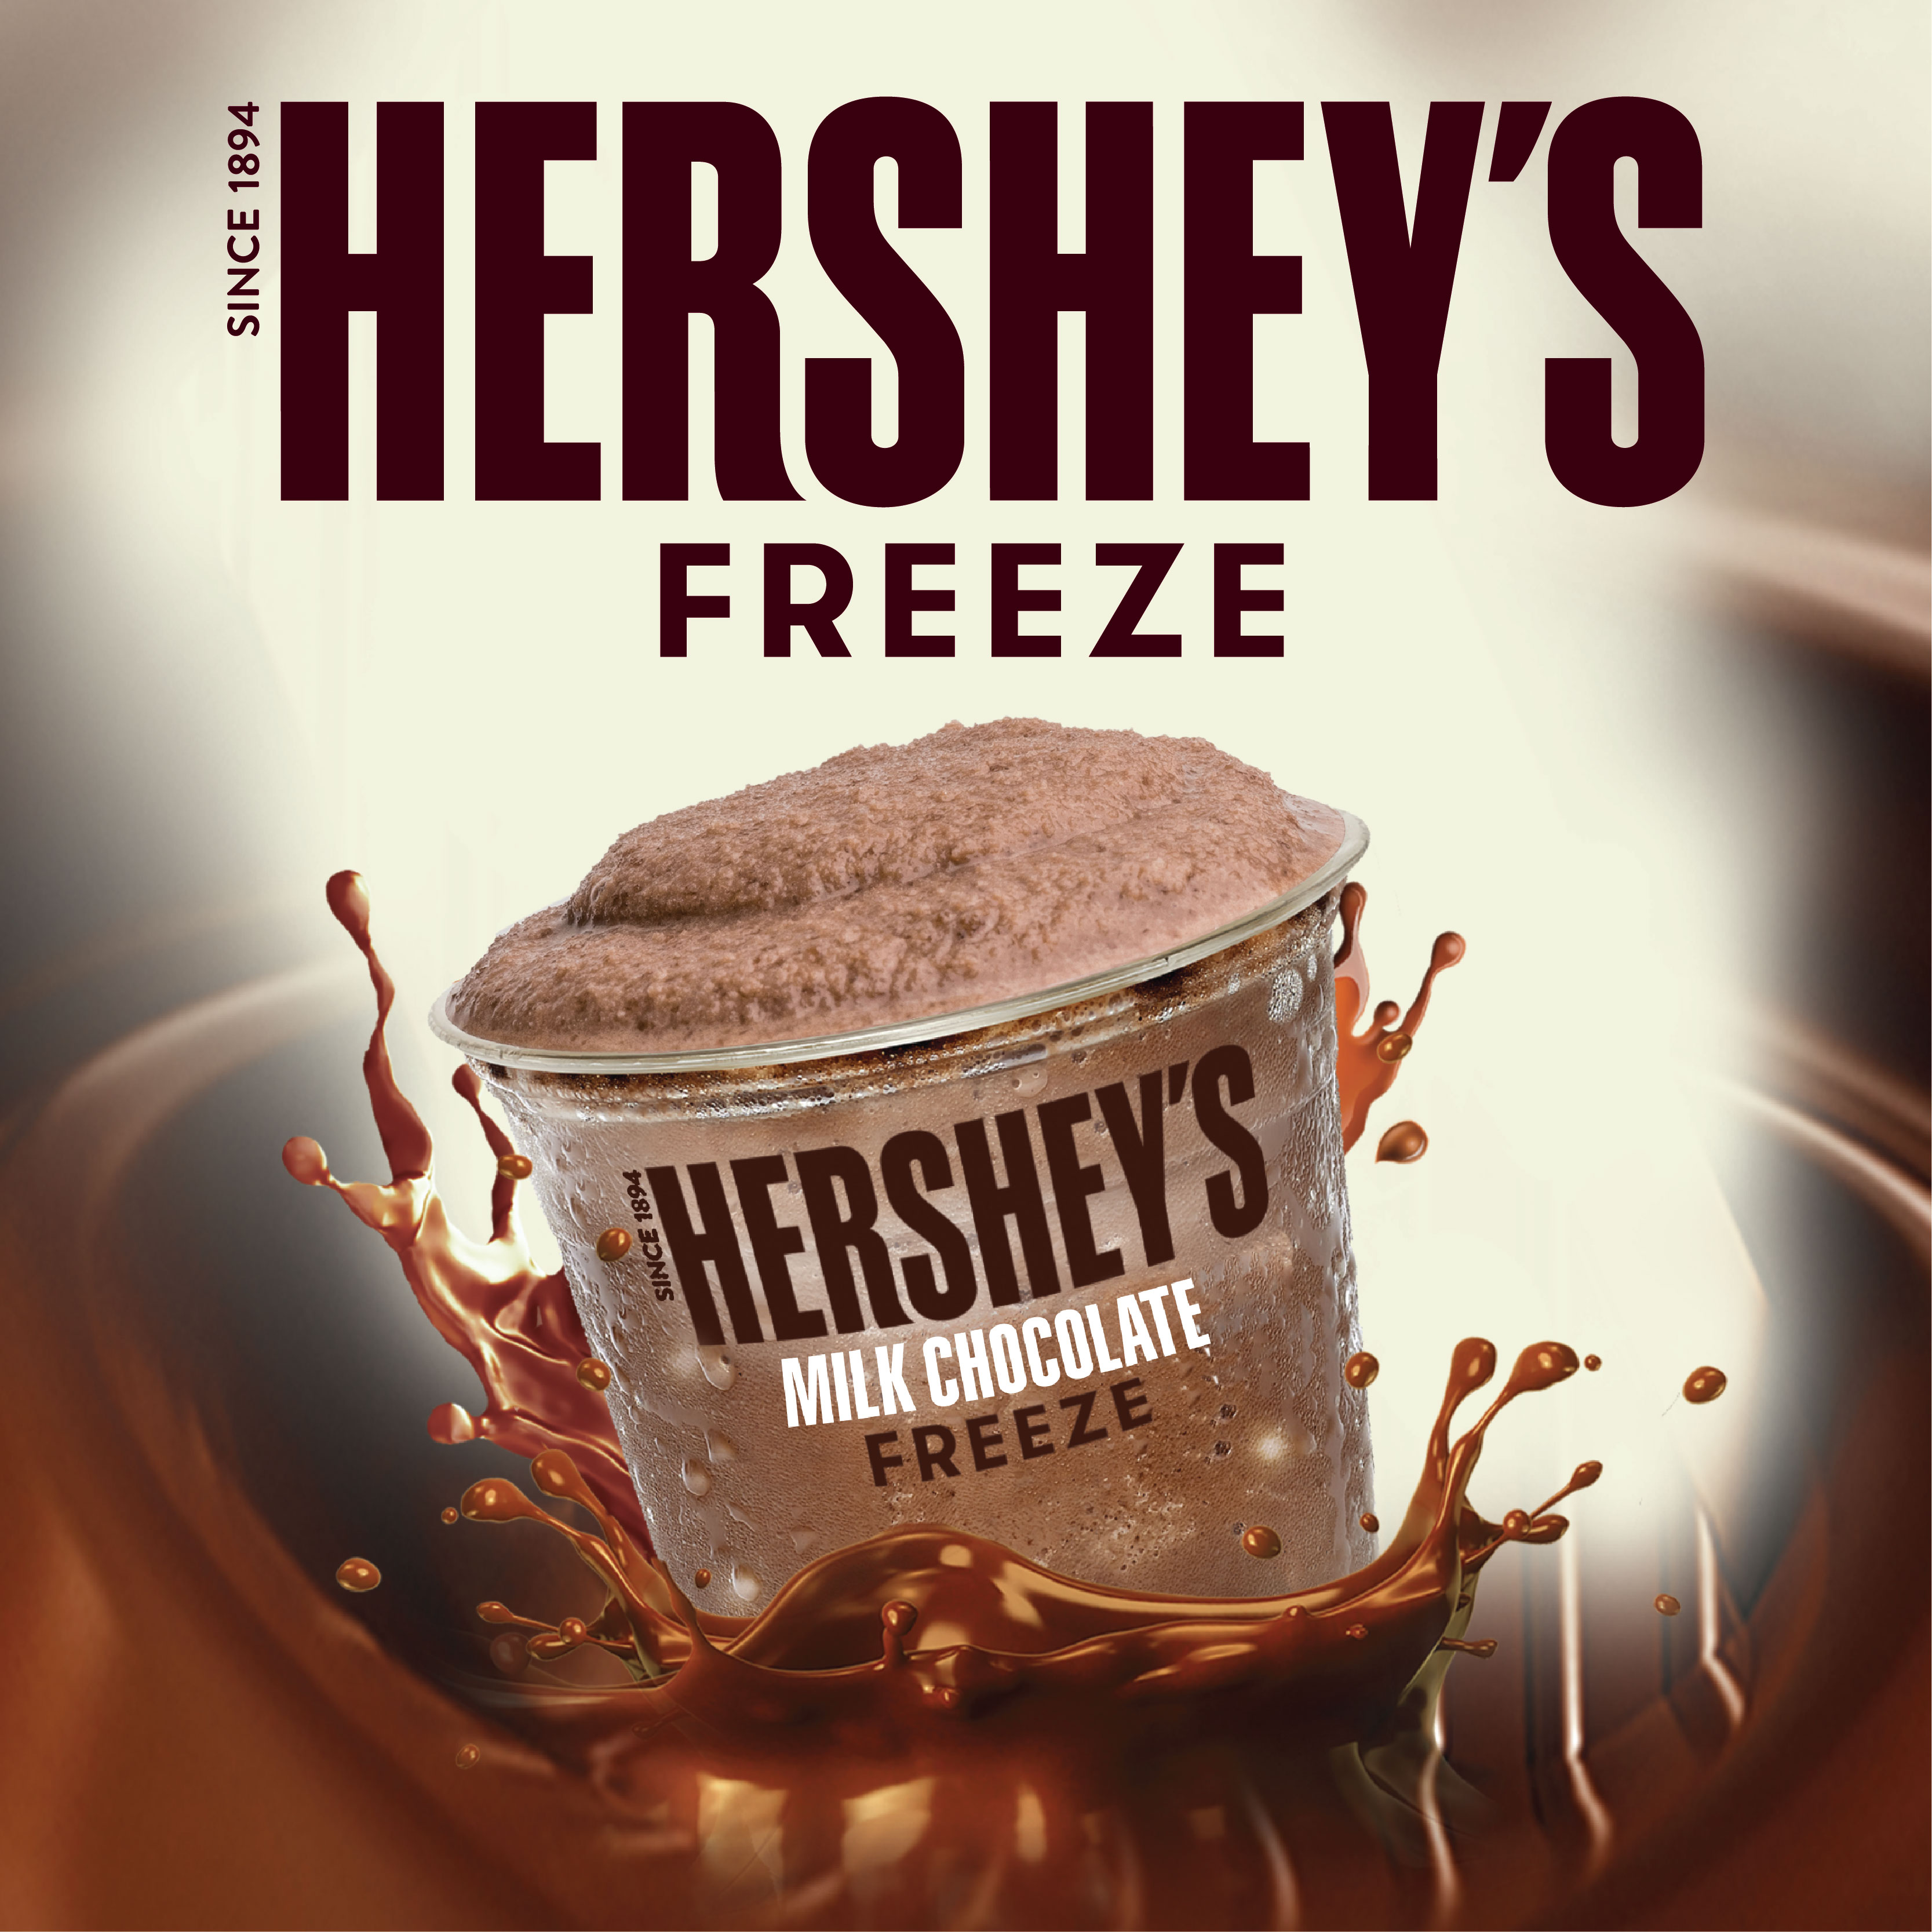 Hershey's Chocolate Drink Maker  Chocolate drinks, Drinks, Chocolate